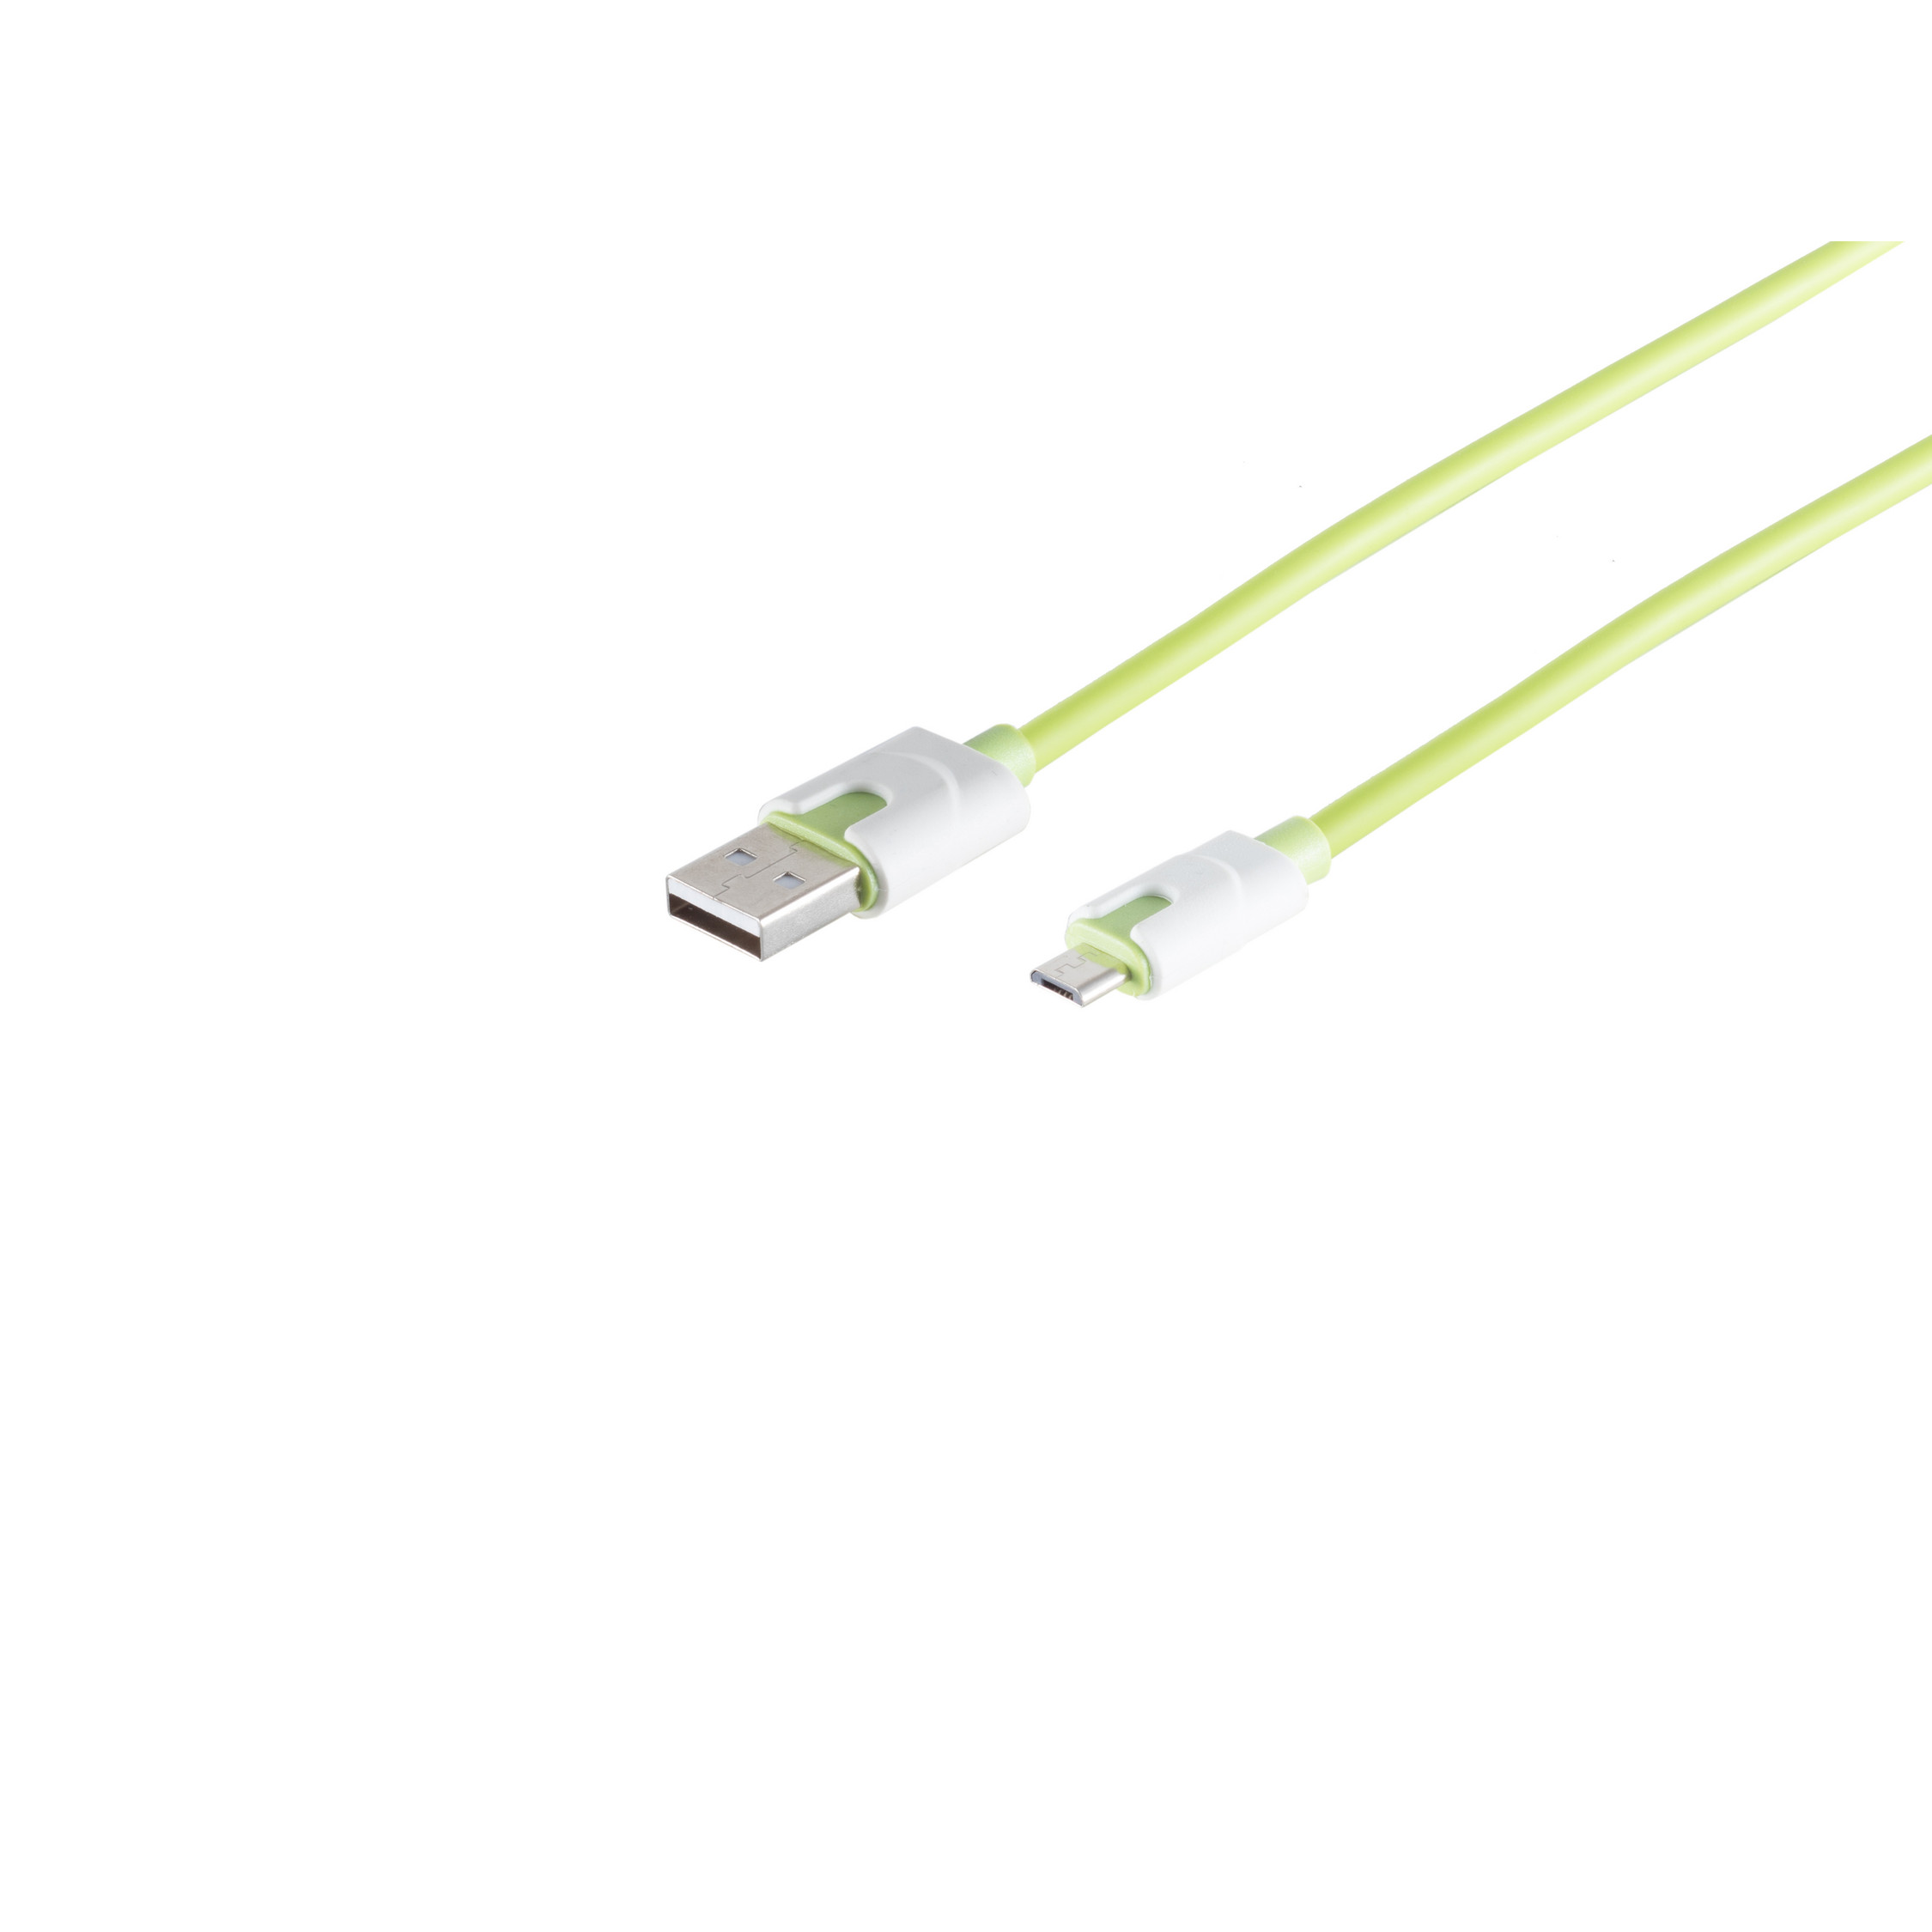 A Stecker 0,9m Micro USB auf S/CONN USB grün B, MAXIMUM Kabel USB-Ladekabel CONNECTIVITY